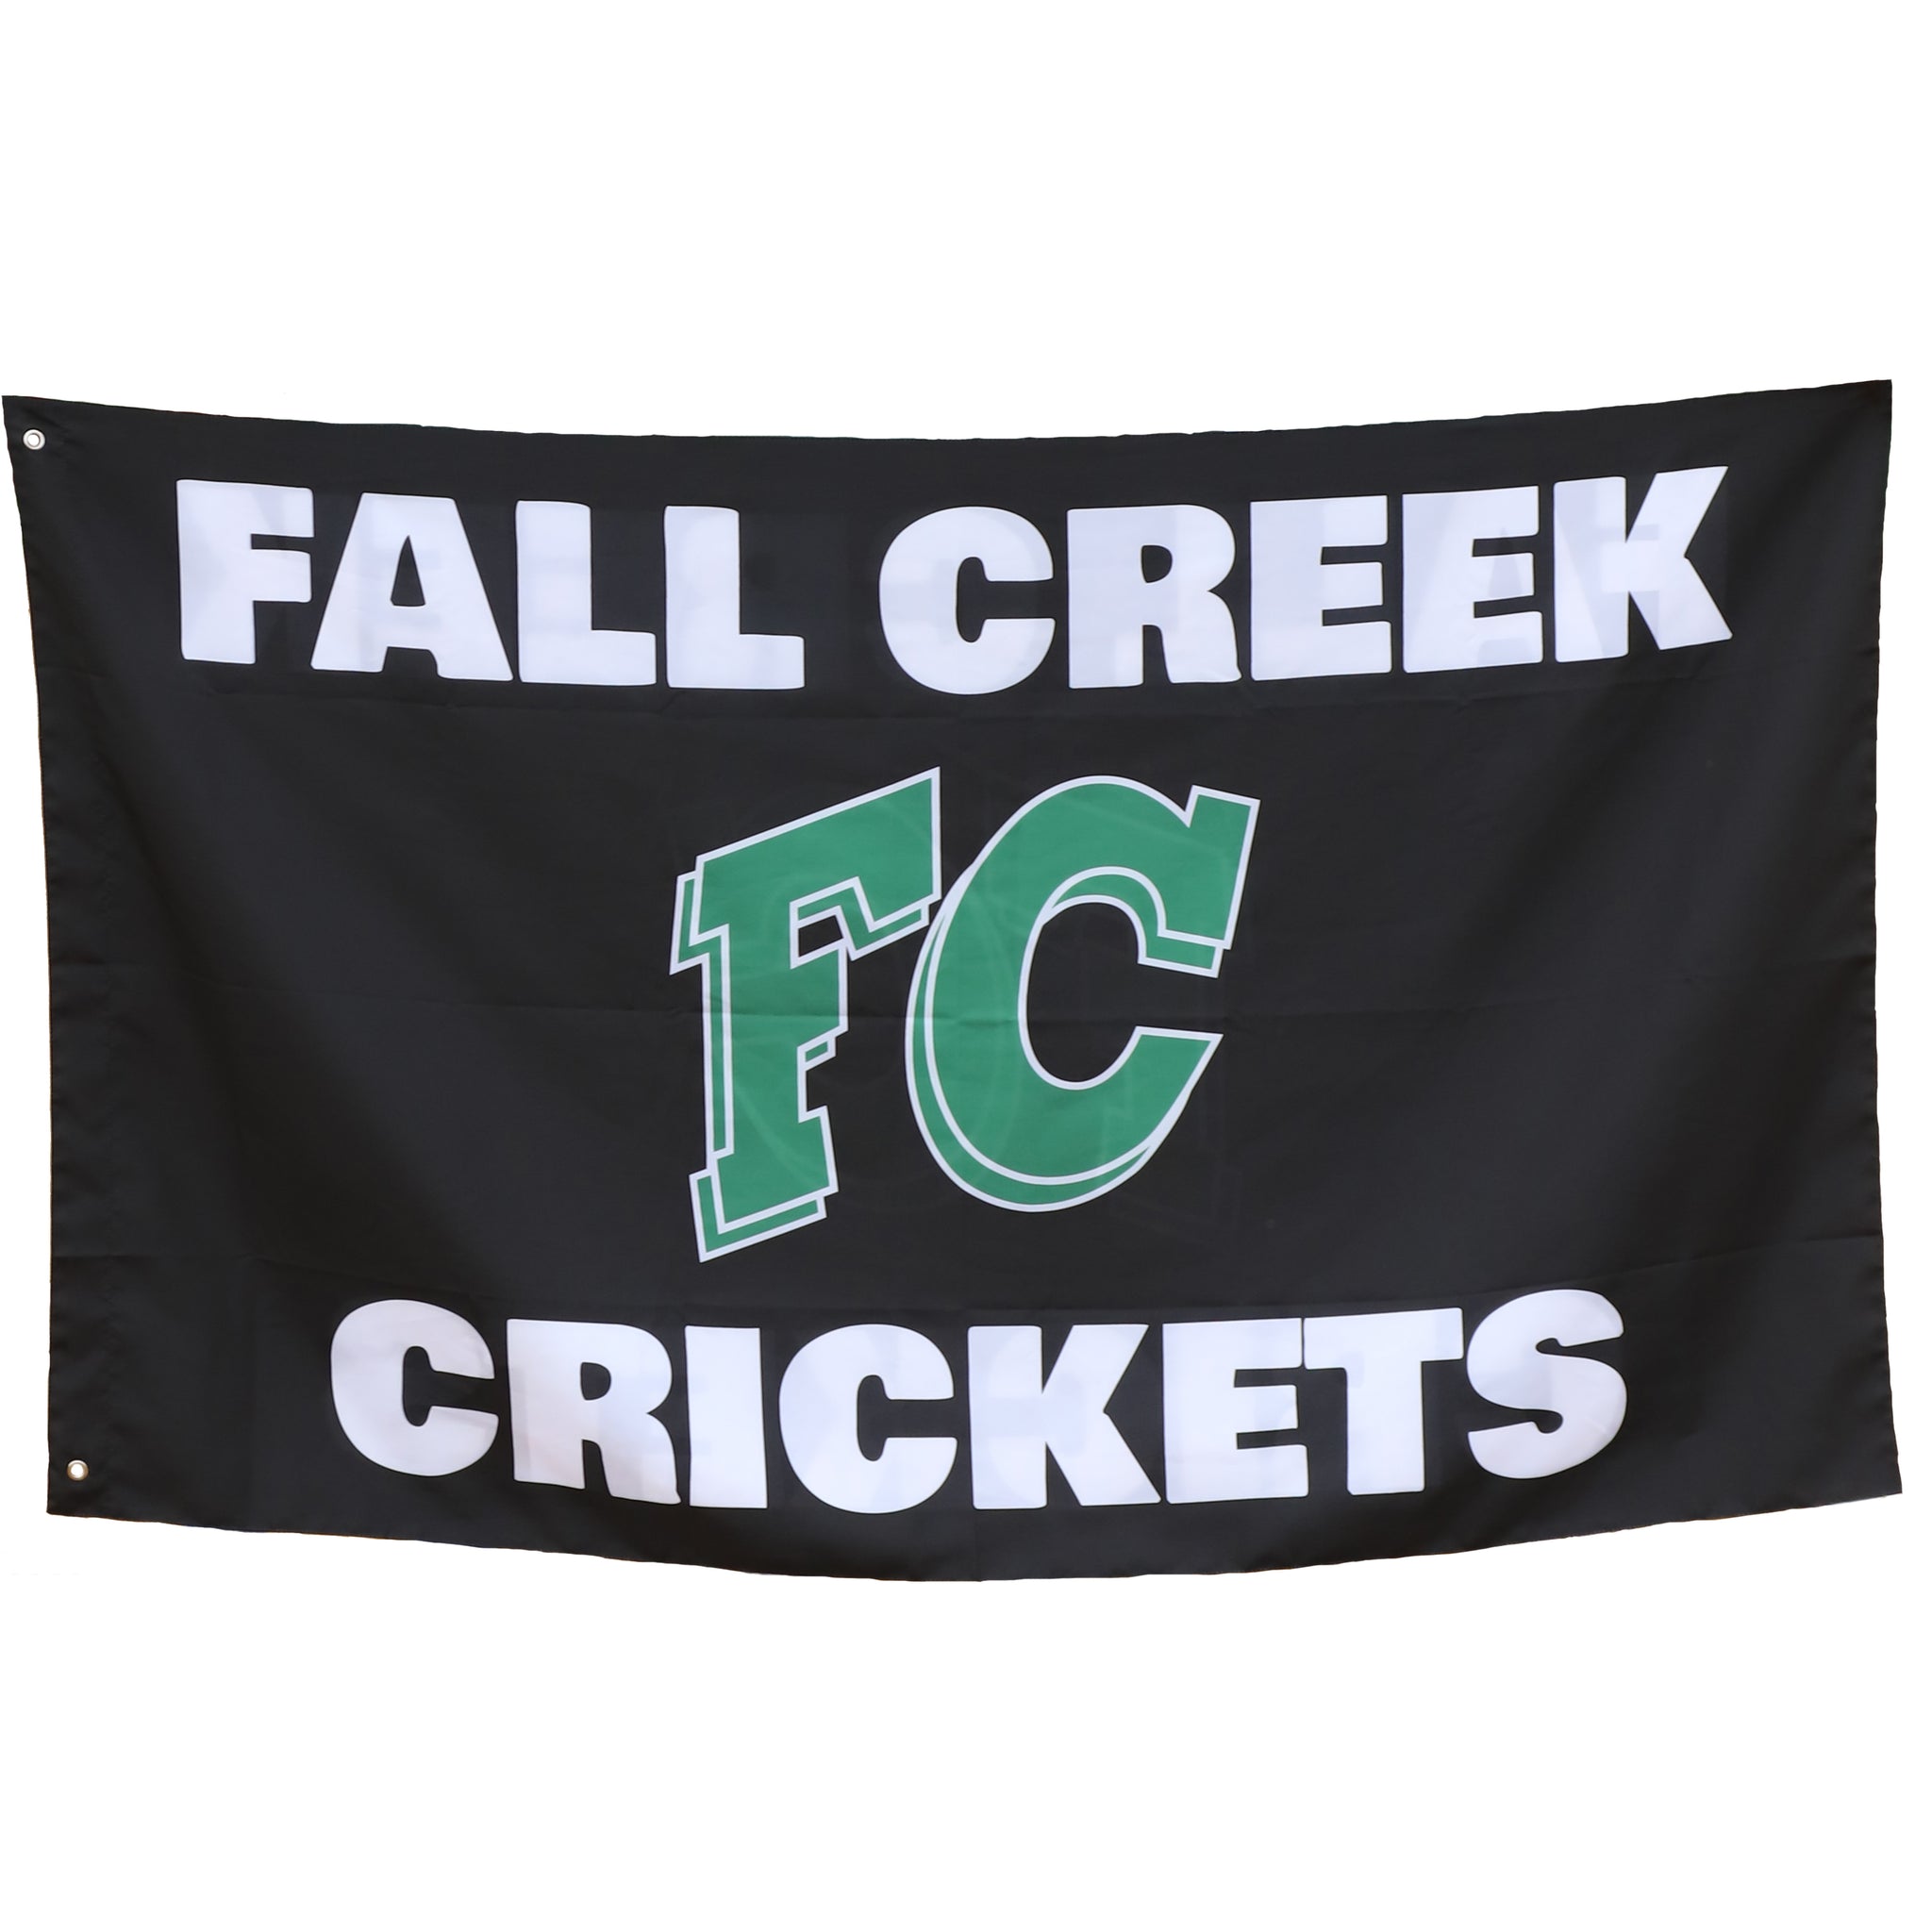 Fall Creek FC Crickets DS Flag